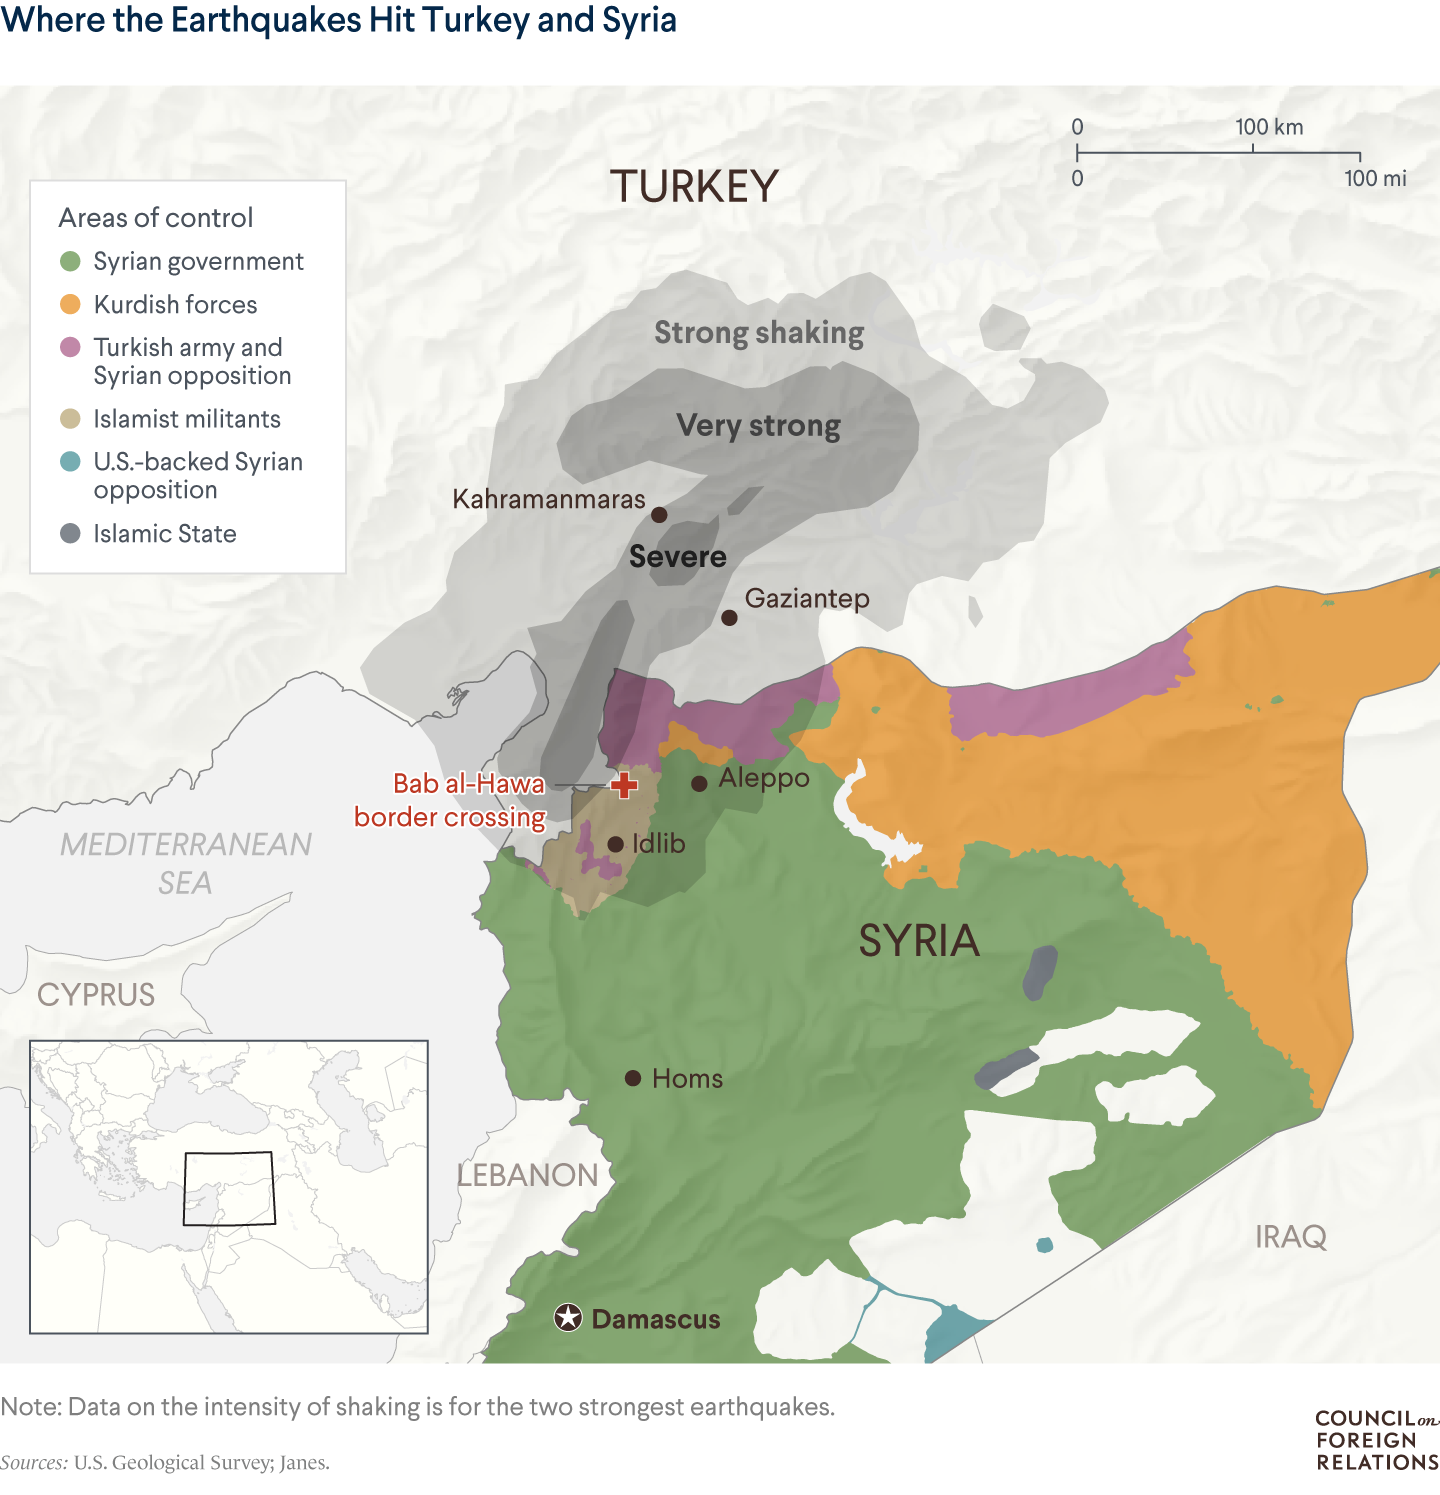 Massive Earthquake Could Reshape Turkish and Syrian Politics